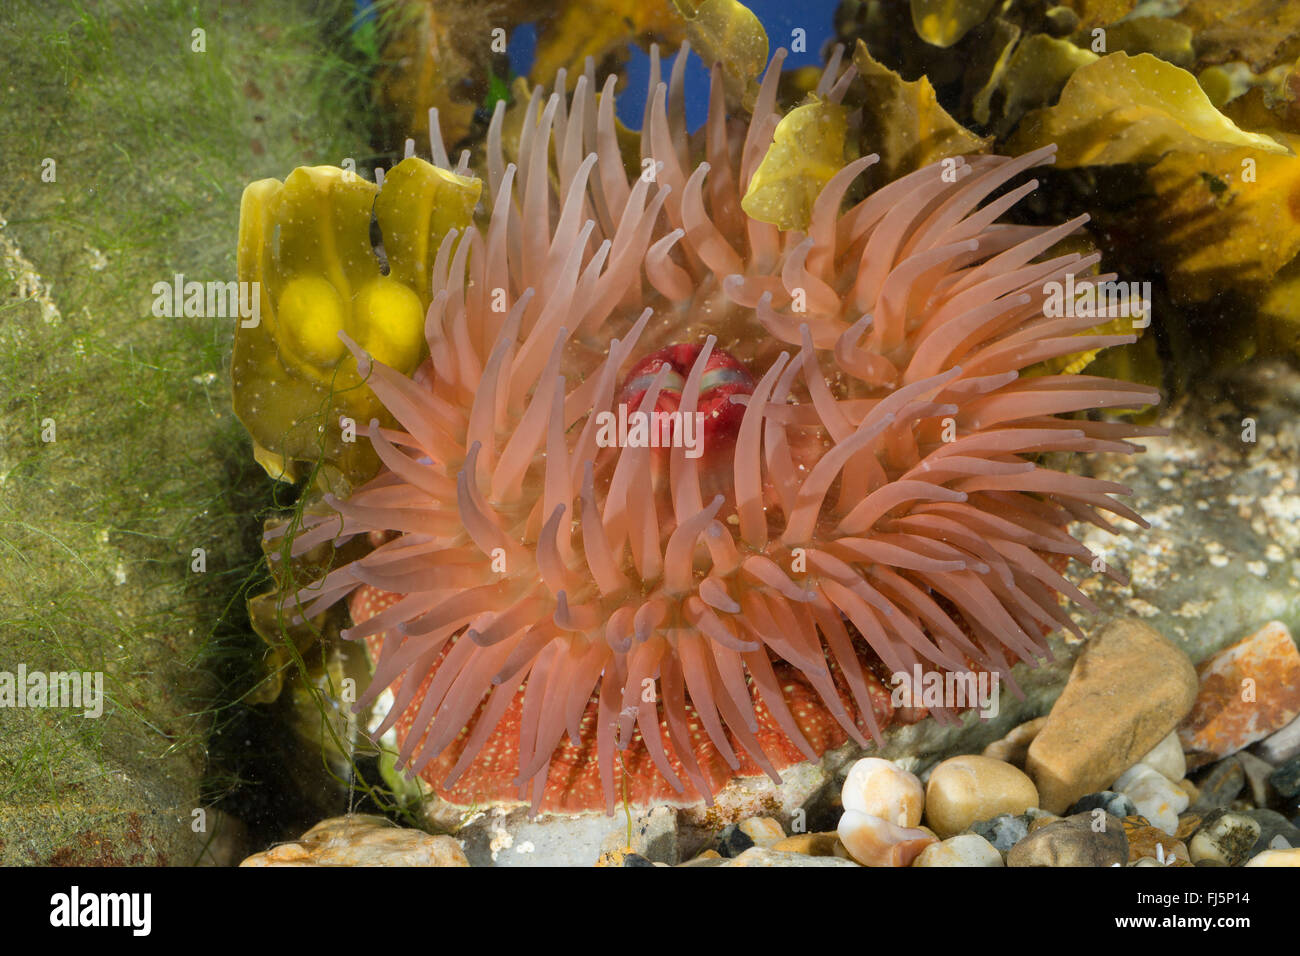 strawberry anemone (Actinia fragacea, Actinia equina var. fragacea), top view Stock Photo